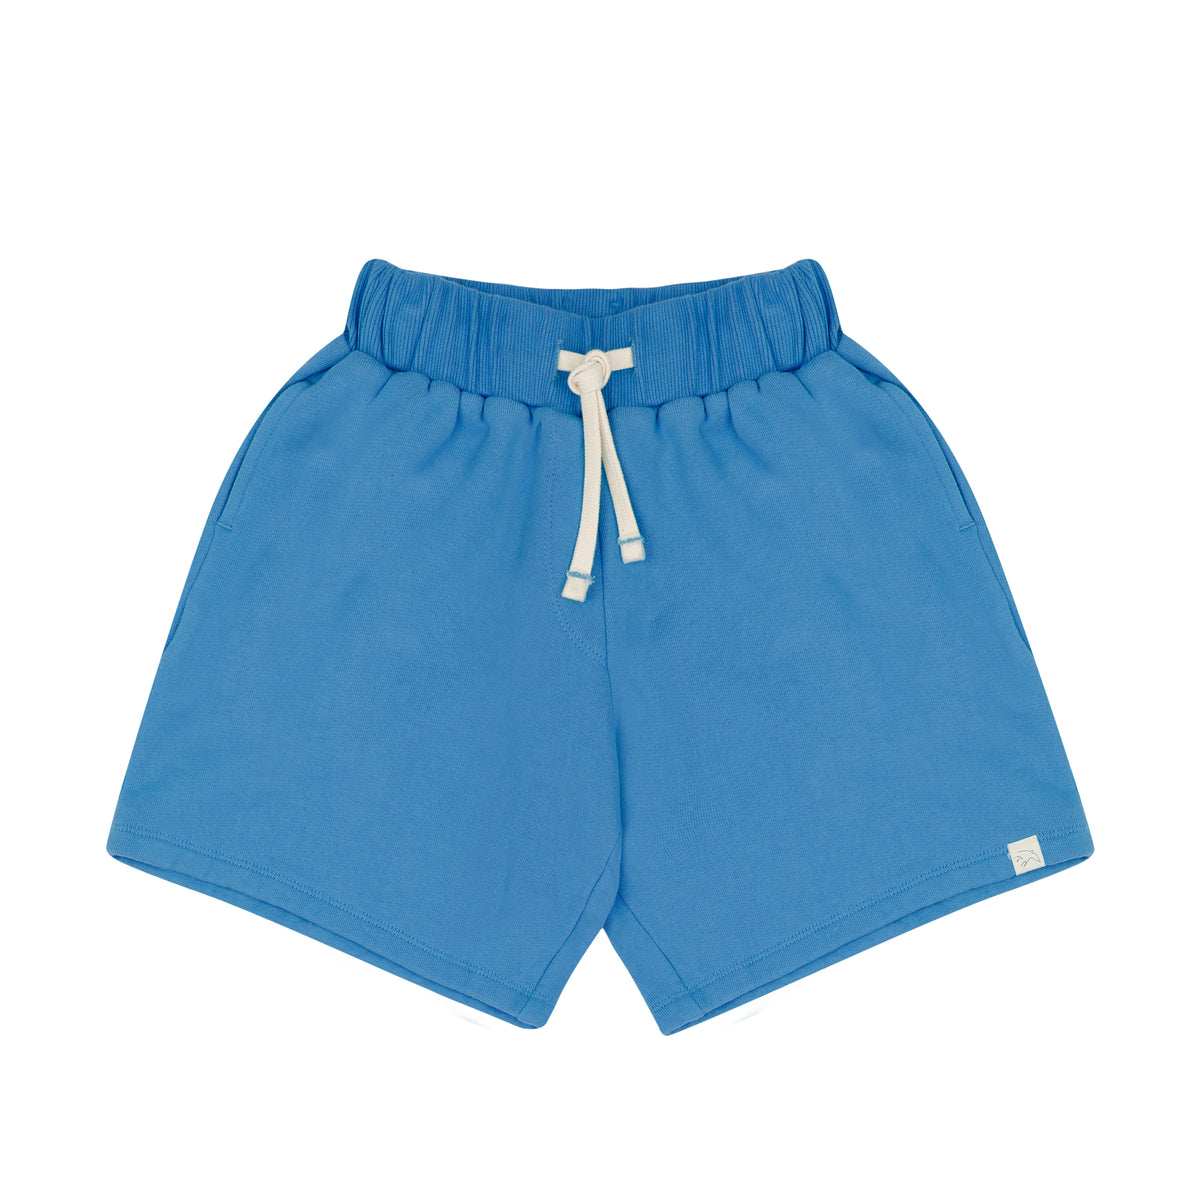 Xavi shorts Bright Blue, Jenest